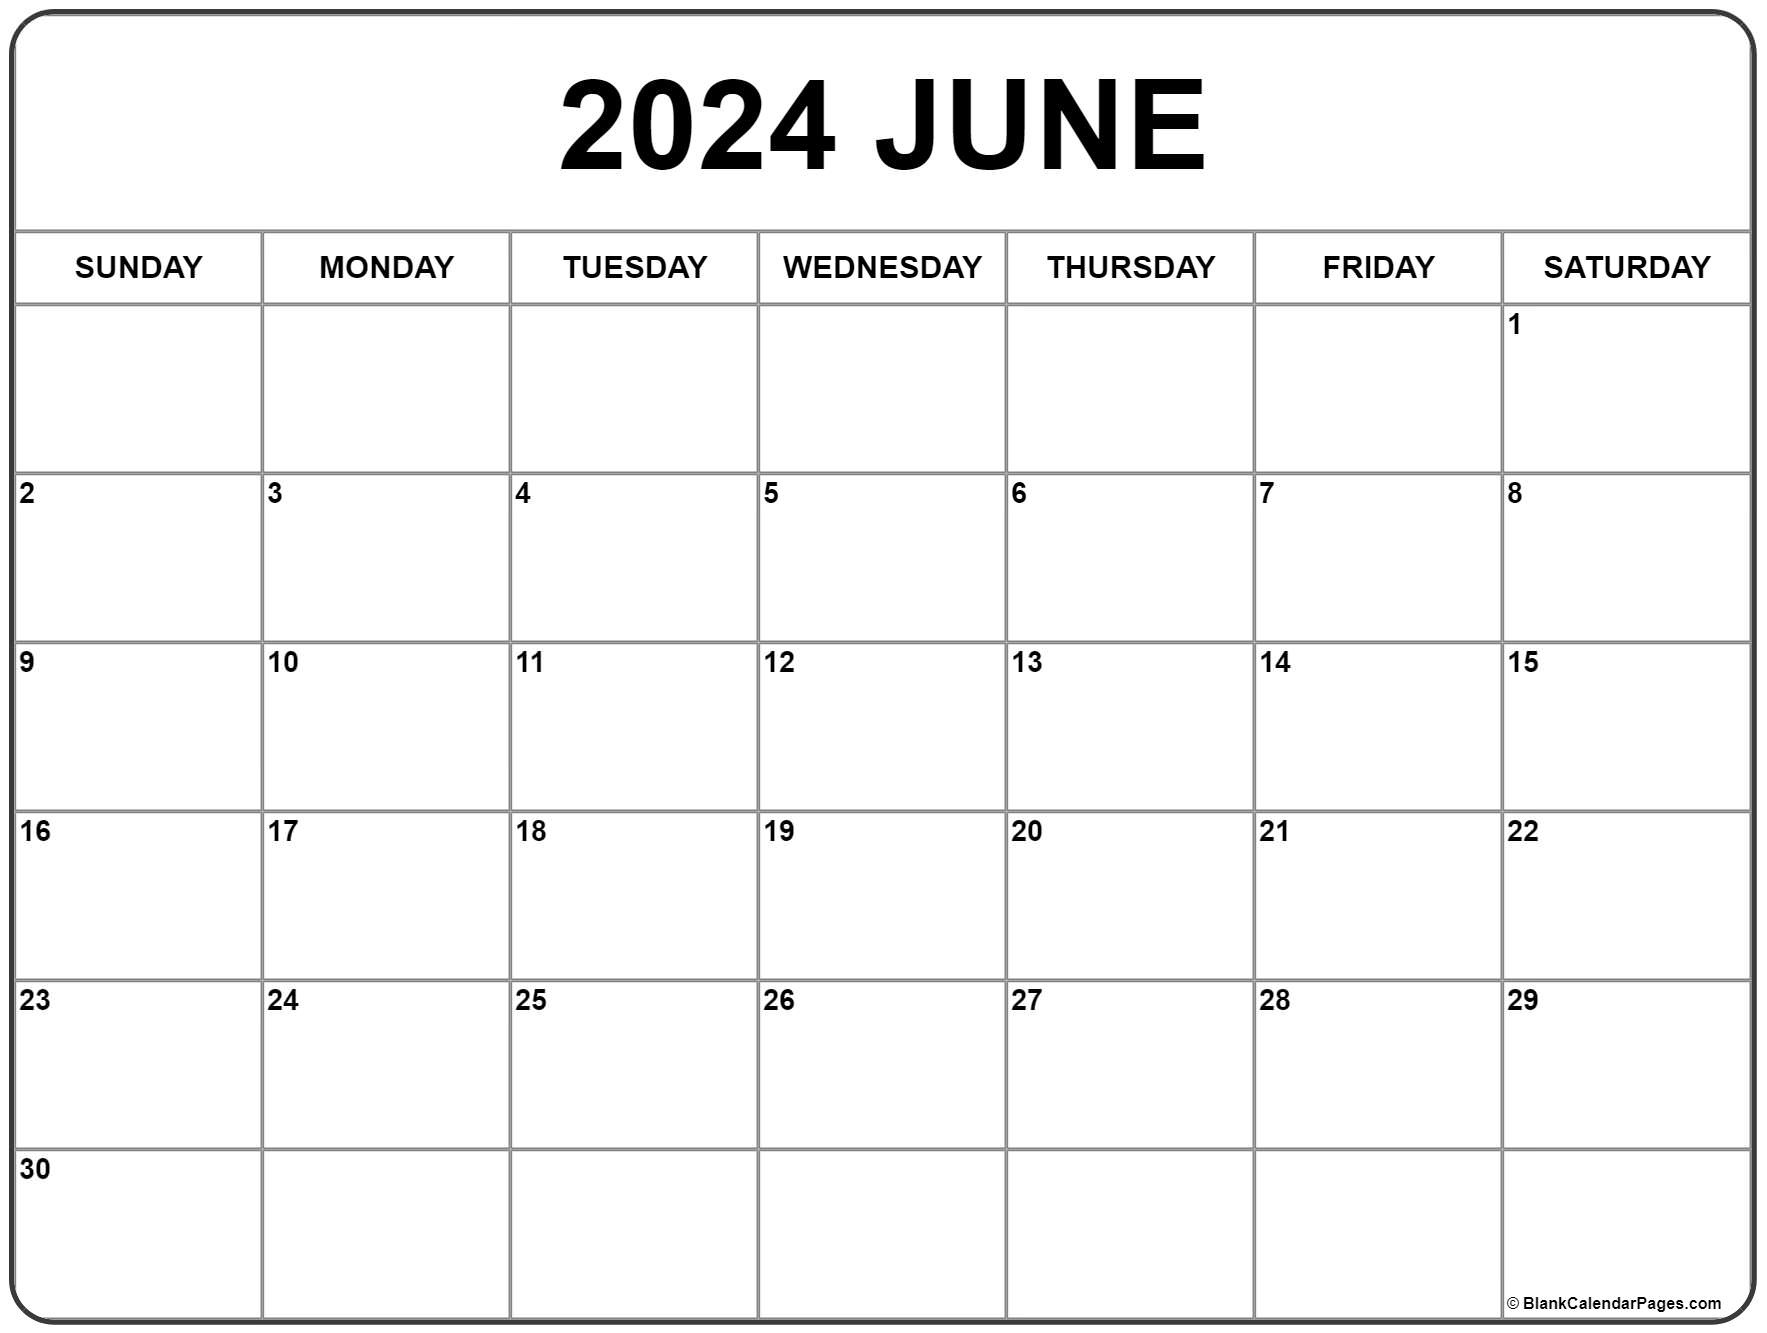 June 2024 Calendar | Free Printable Calendar regarding Calendar Template For June 2024